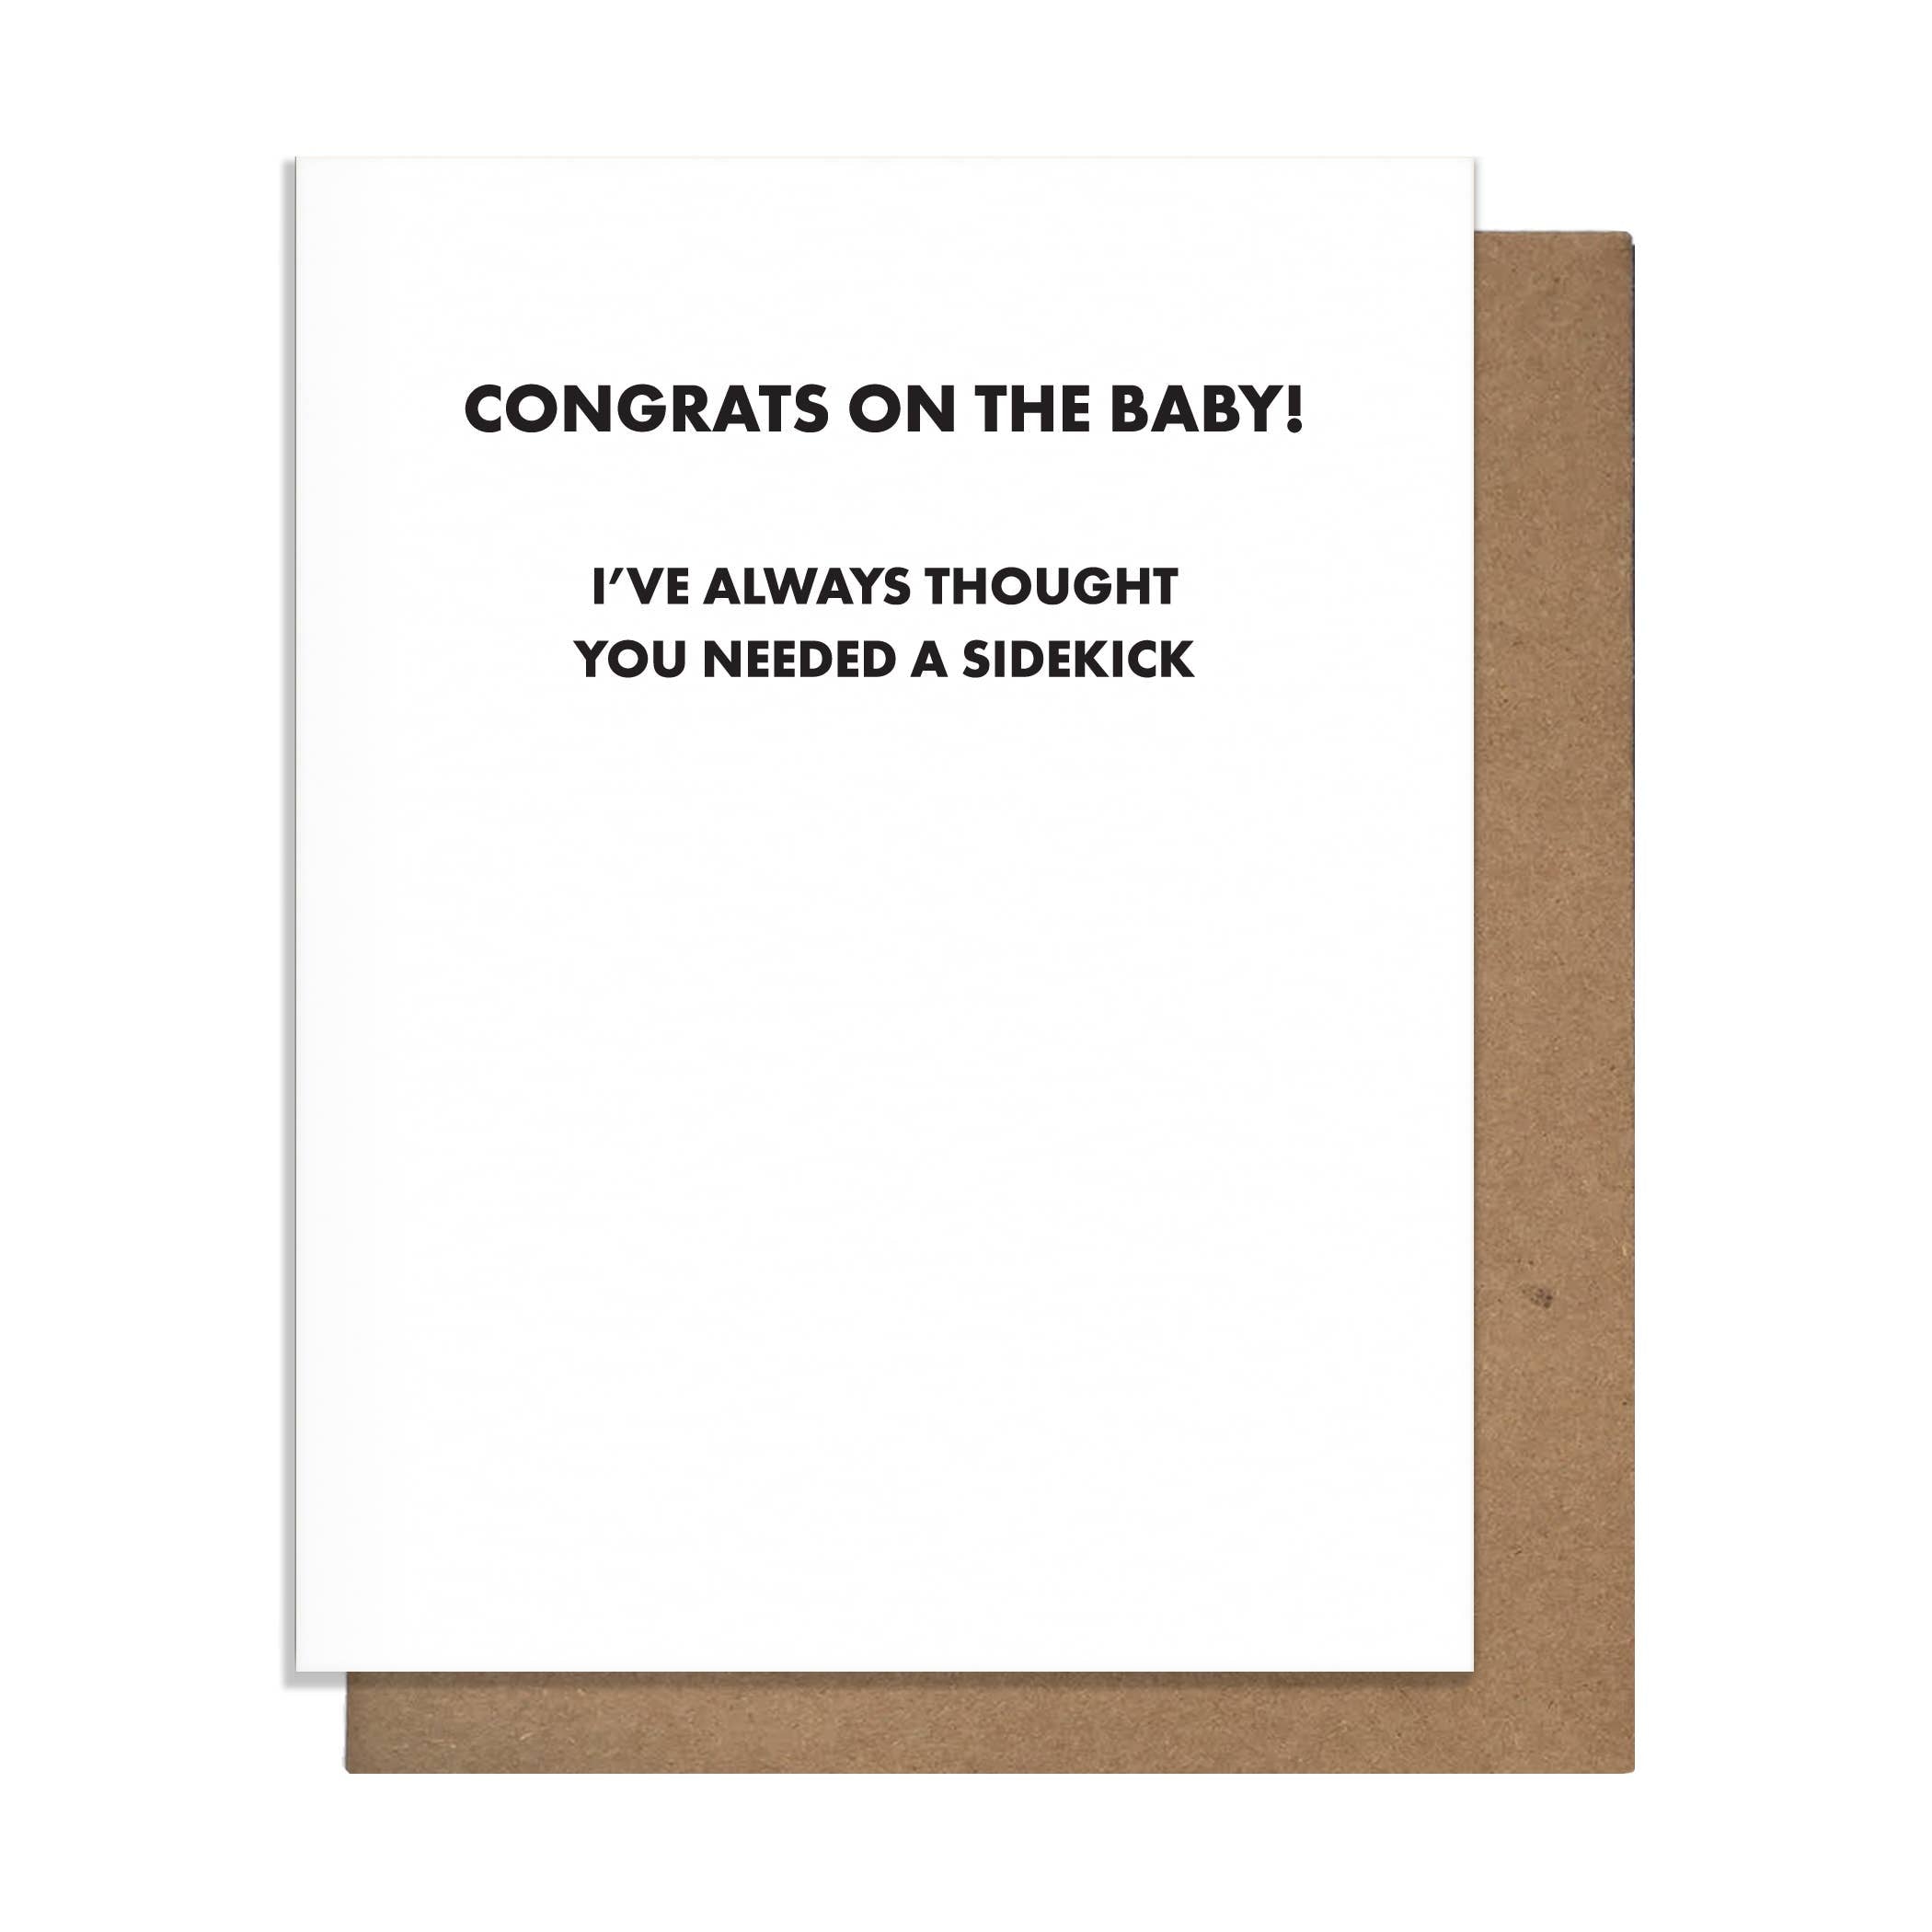 Pretty Alright Goods - Sidekick -  Baby Card